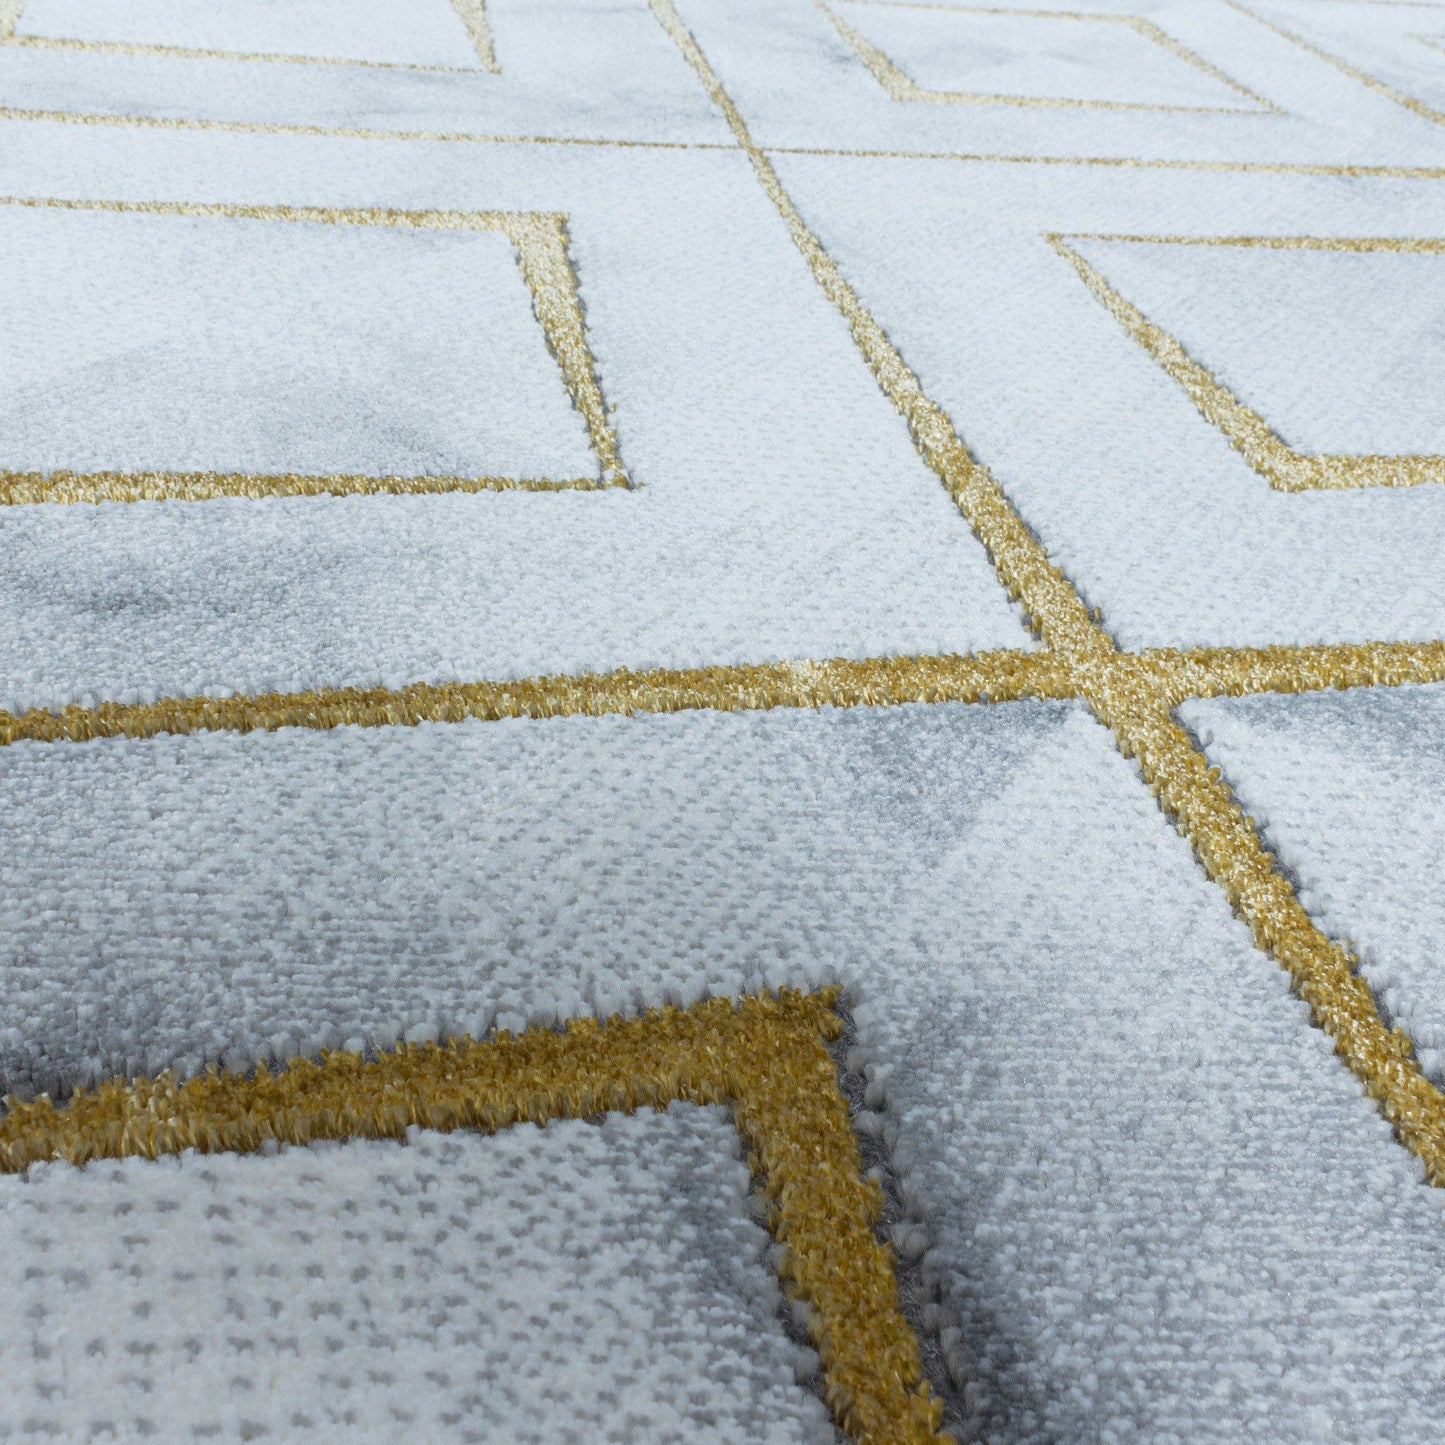 NAXOS3811GULD Tæppe (140 x 200) - Guld Hvid Grå